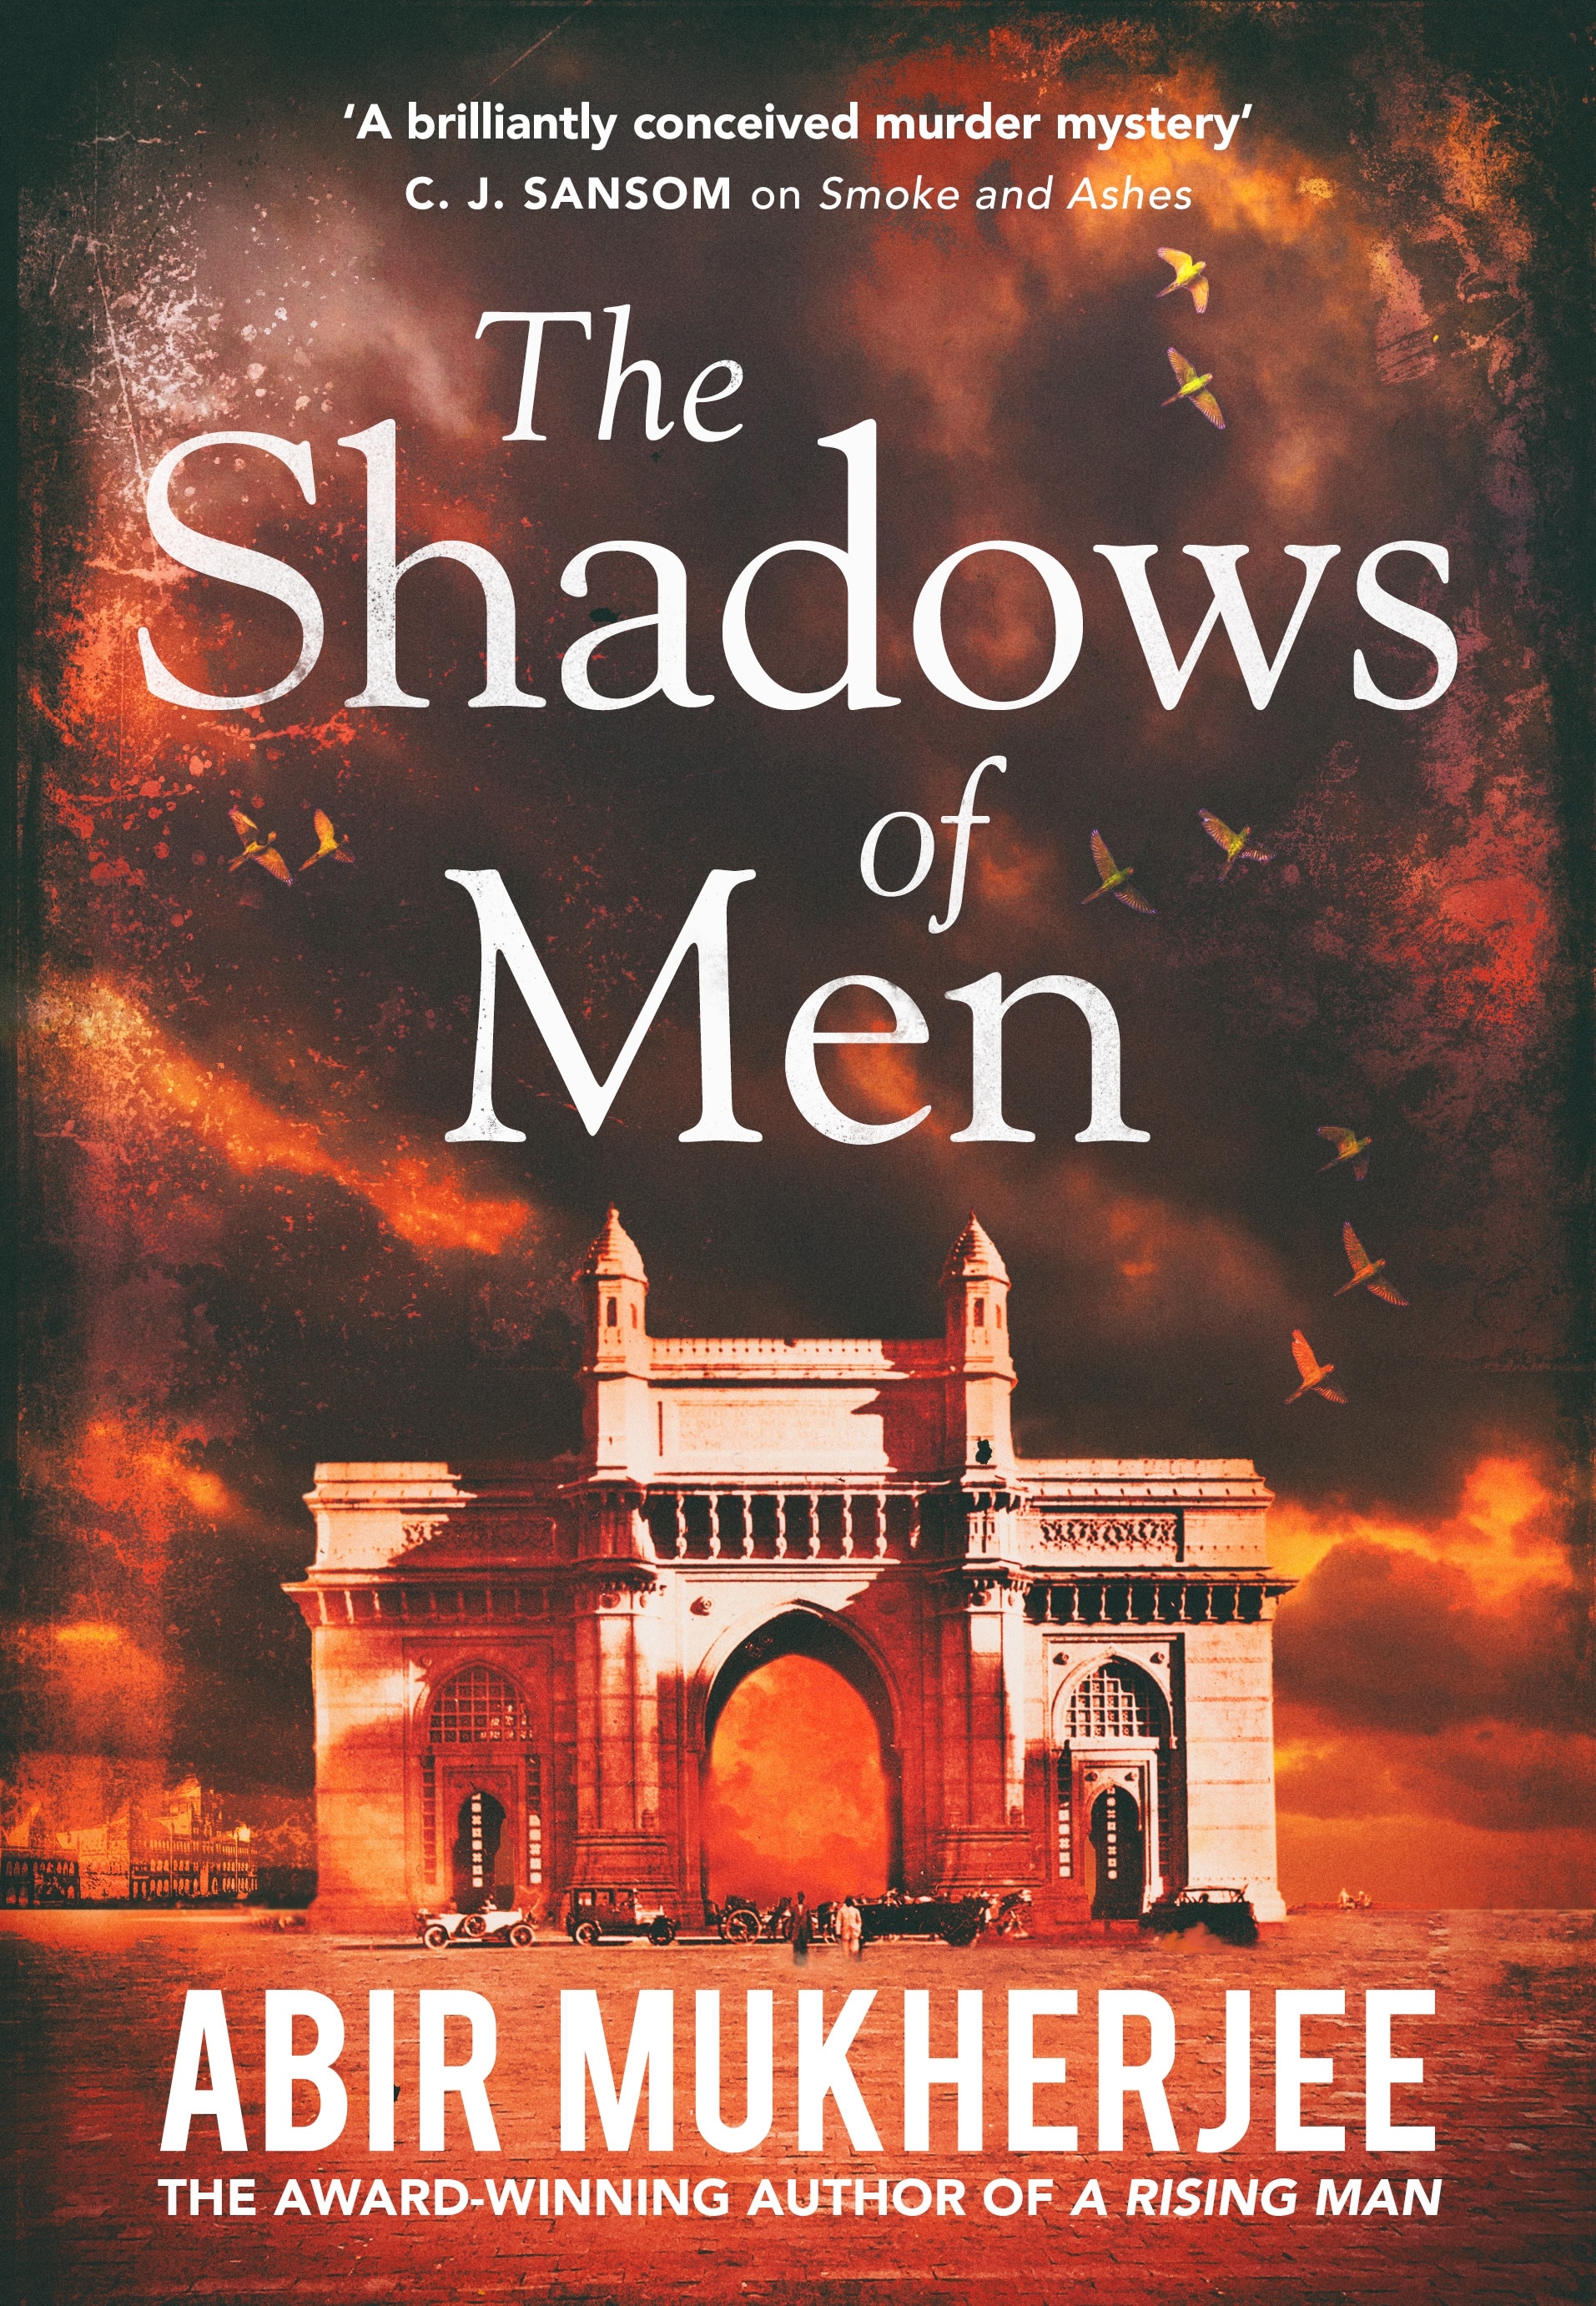 Abir Mukherjee's Sam Wyndham books in order: The Shadows of Men, book 5